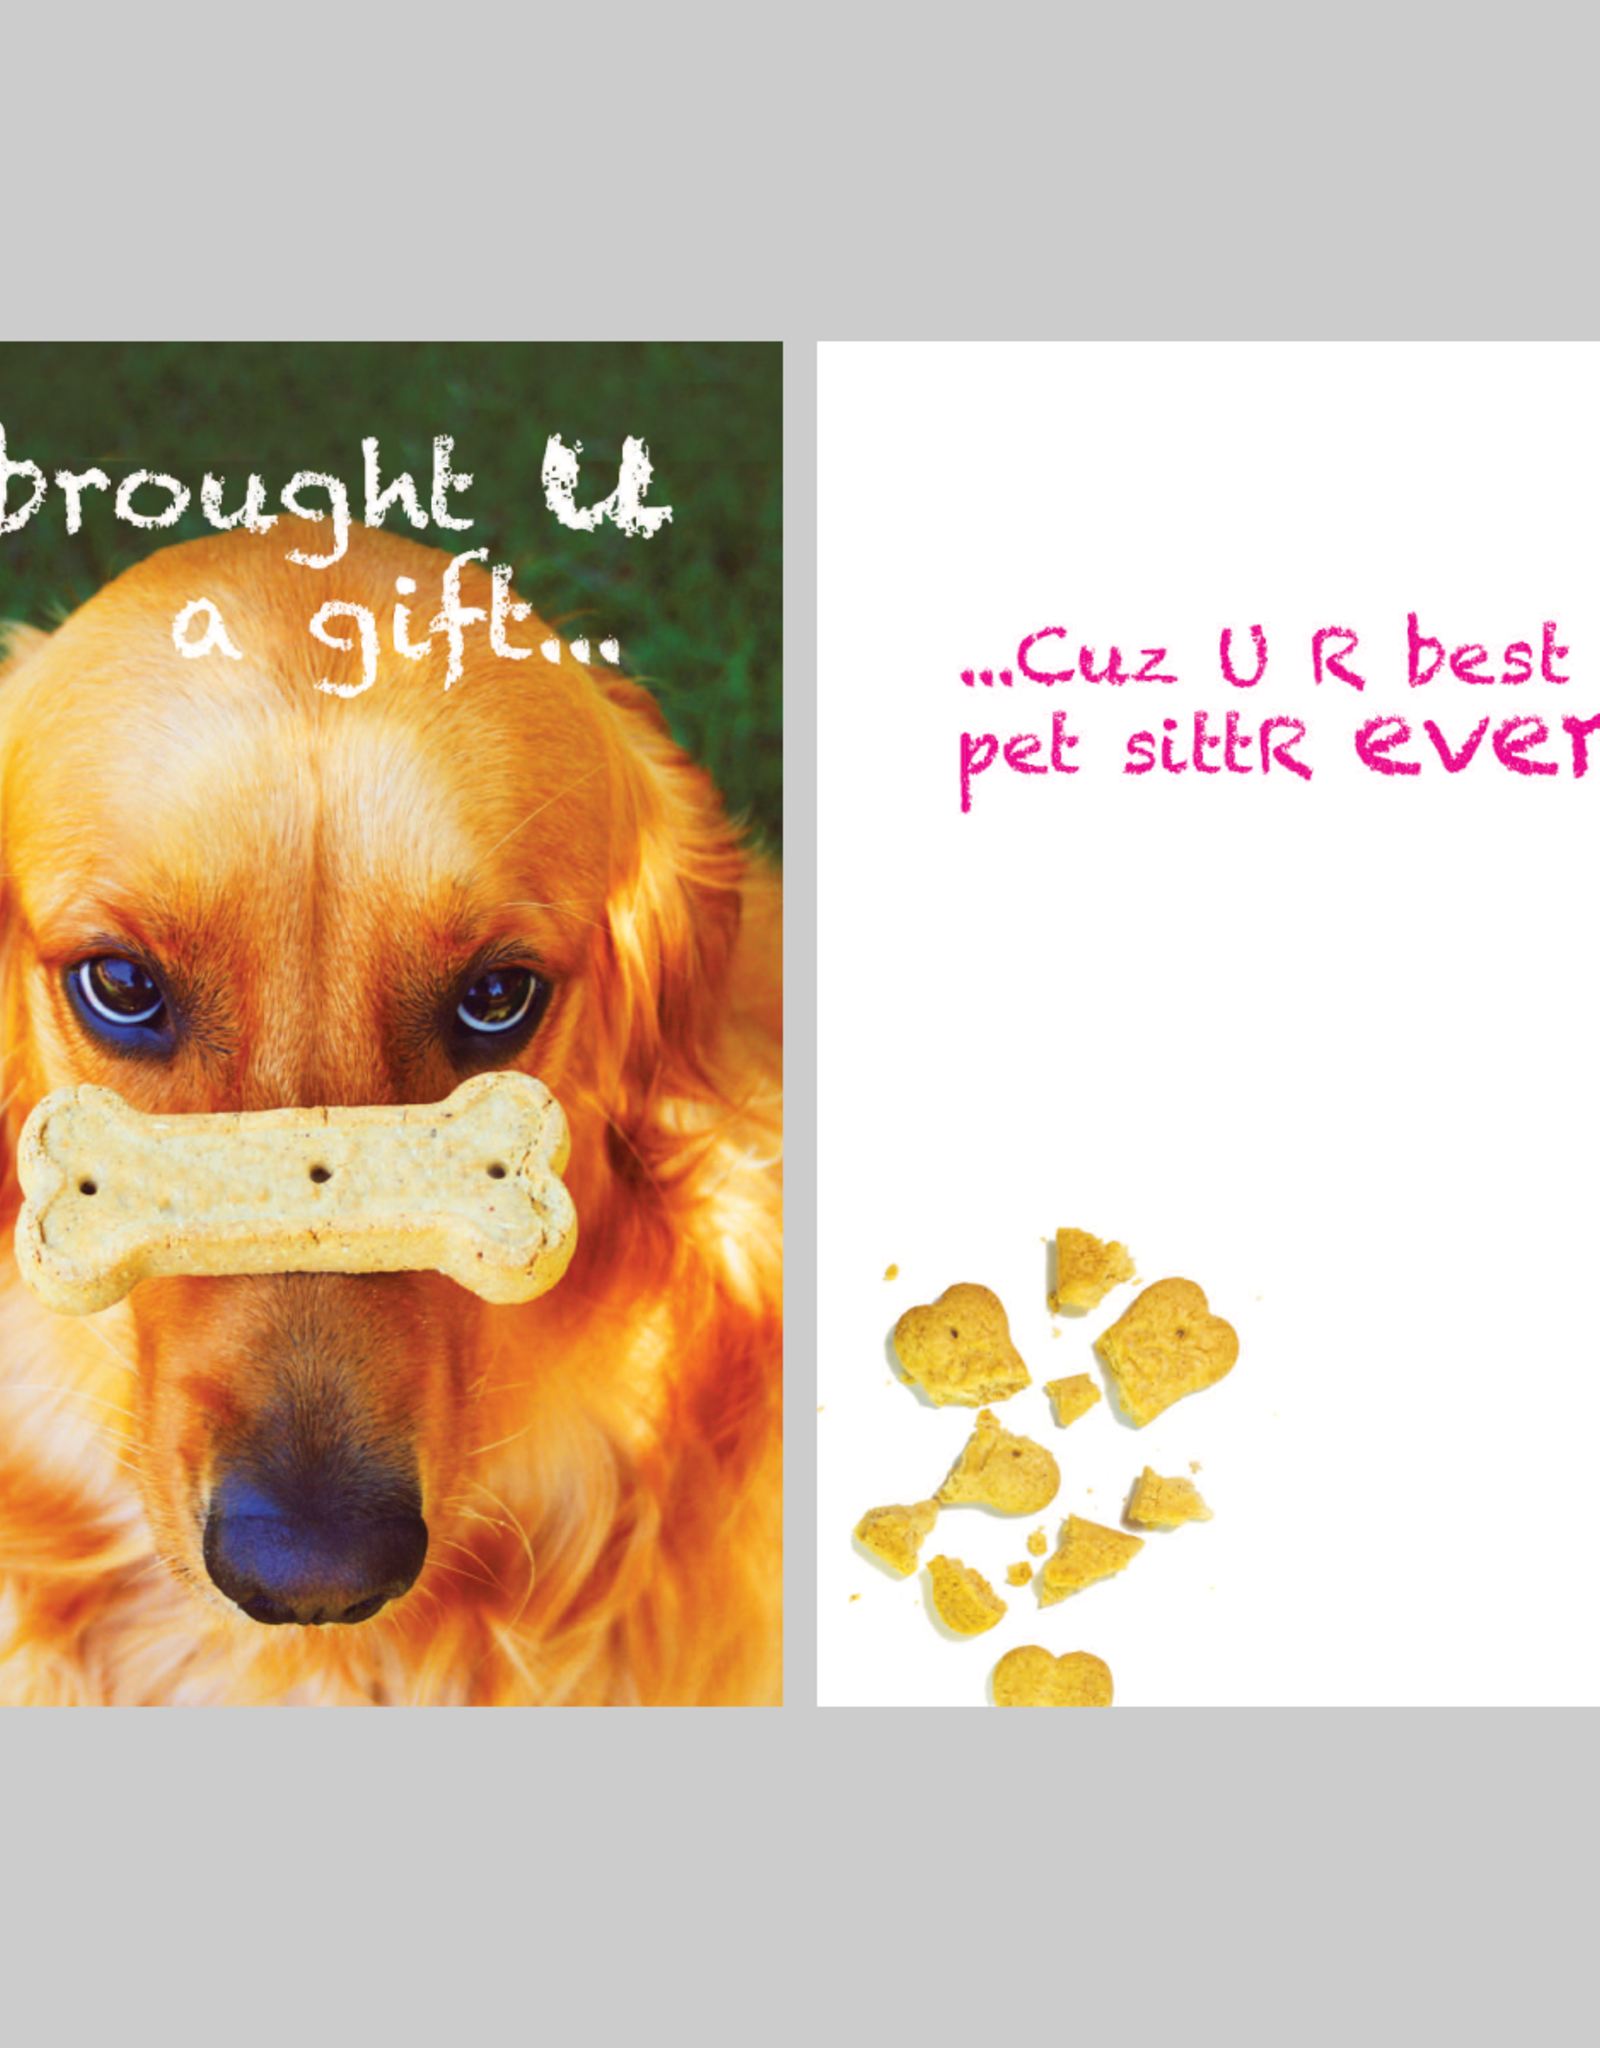 Dog Speak Dog Speak Card - Pet Sitter - i brought U a gift